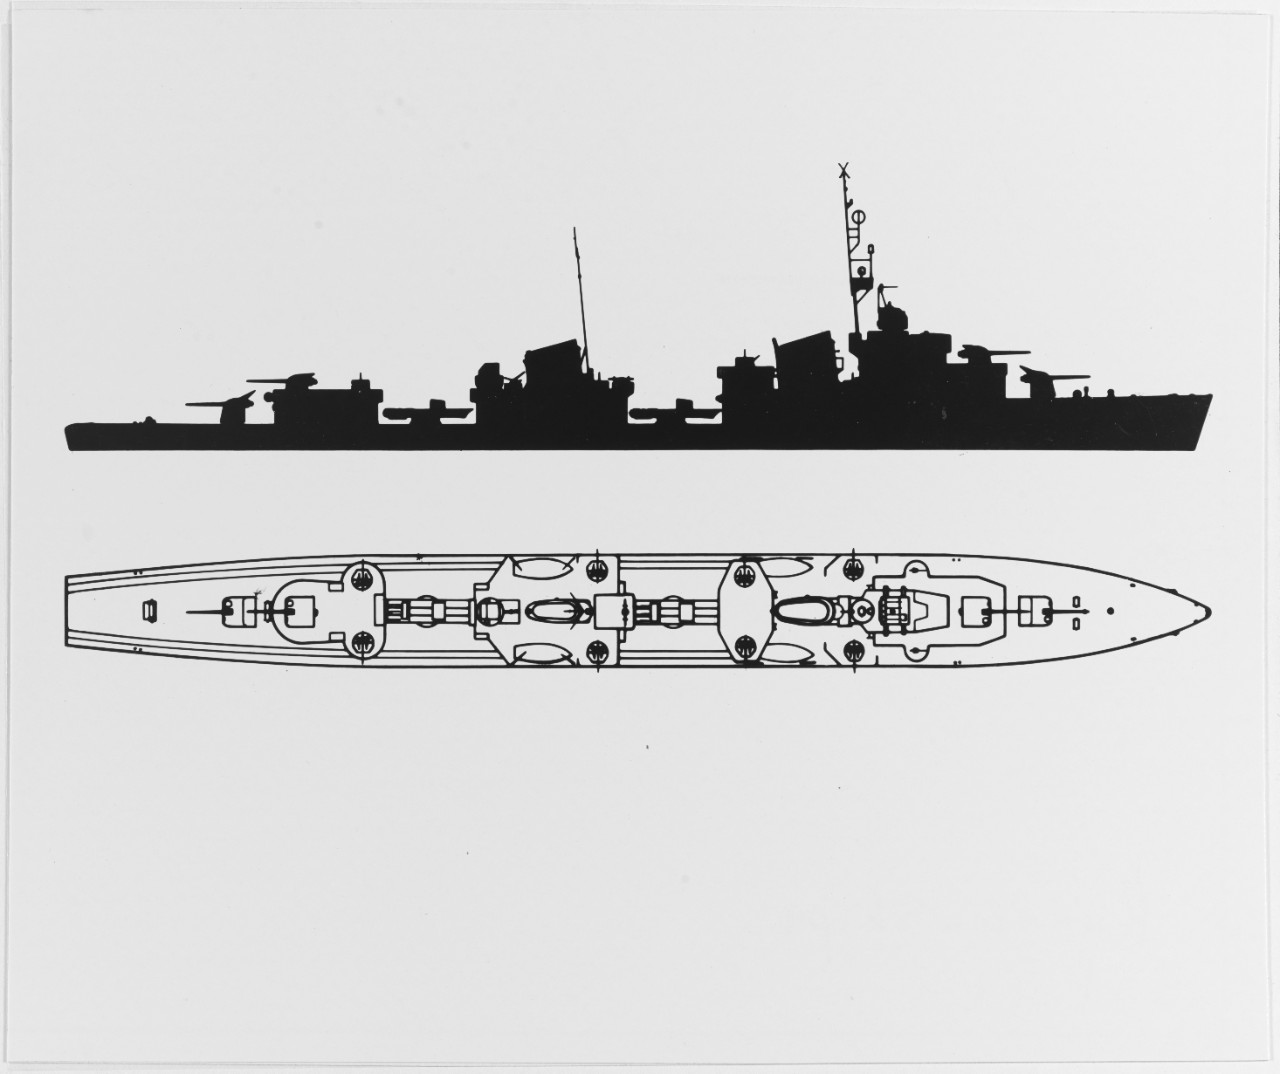 Soviet SILNYI Class Destroyer (DD)